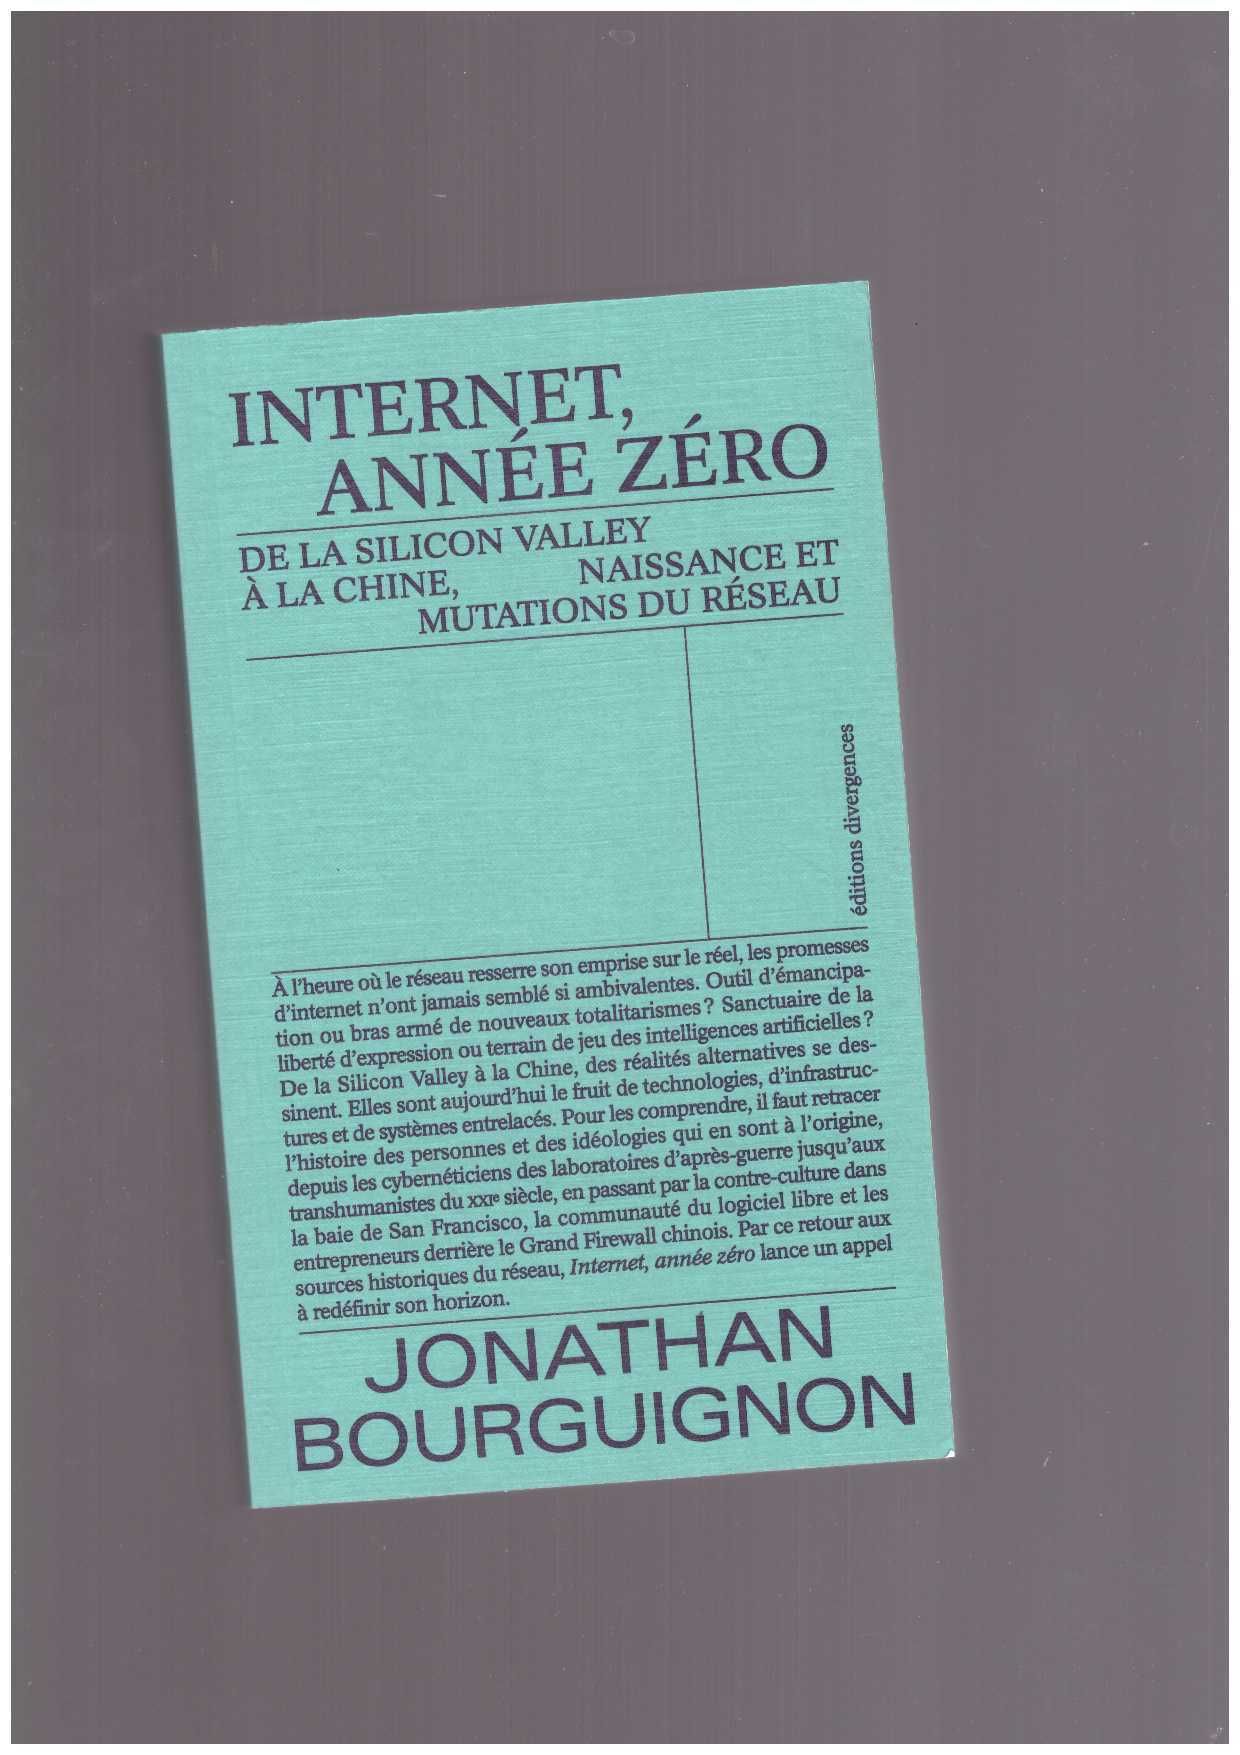 BOURGUIGNON, Jonathan - Internet, année zéro